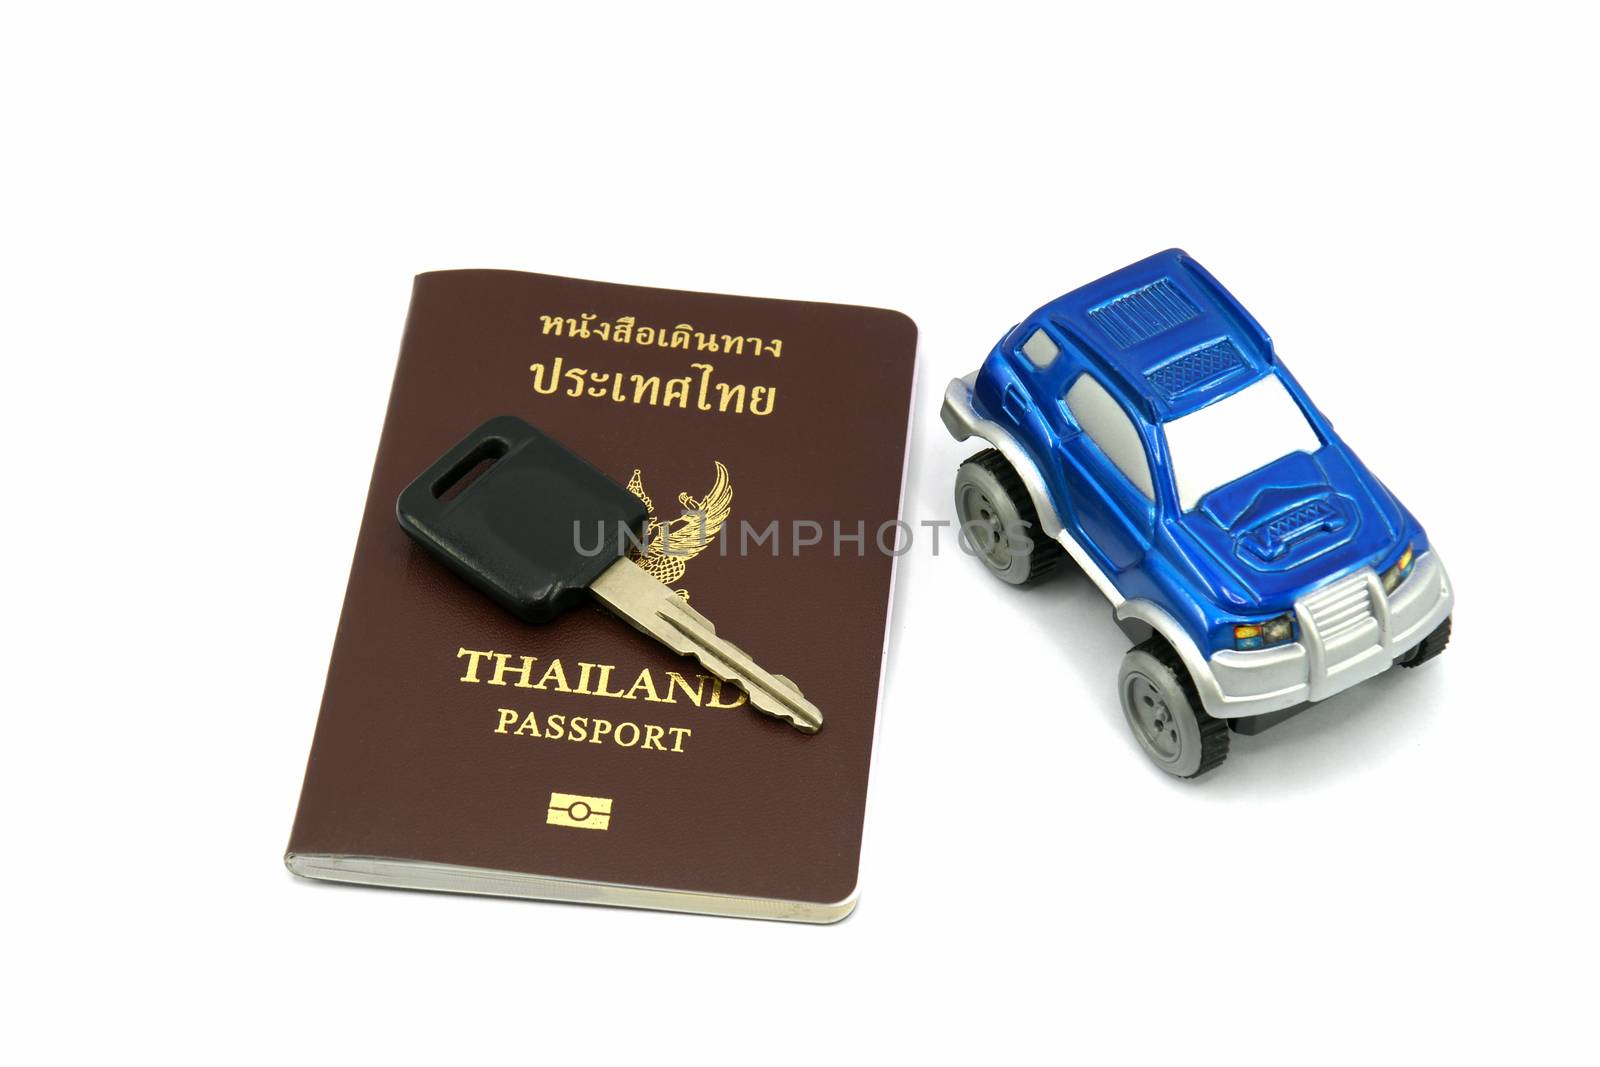 Thailand Passport and Car by mranucha